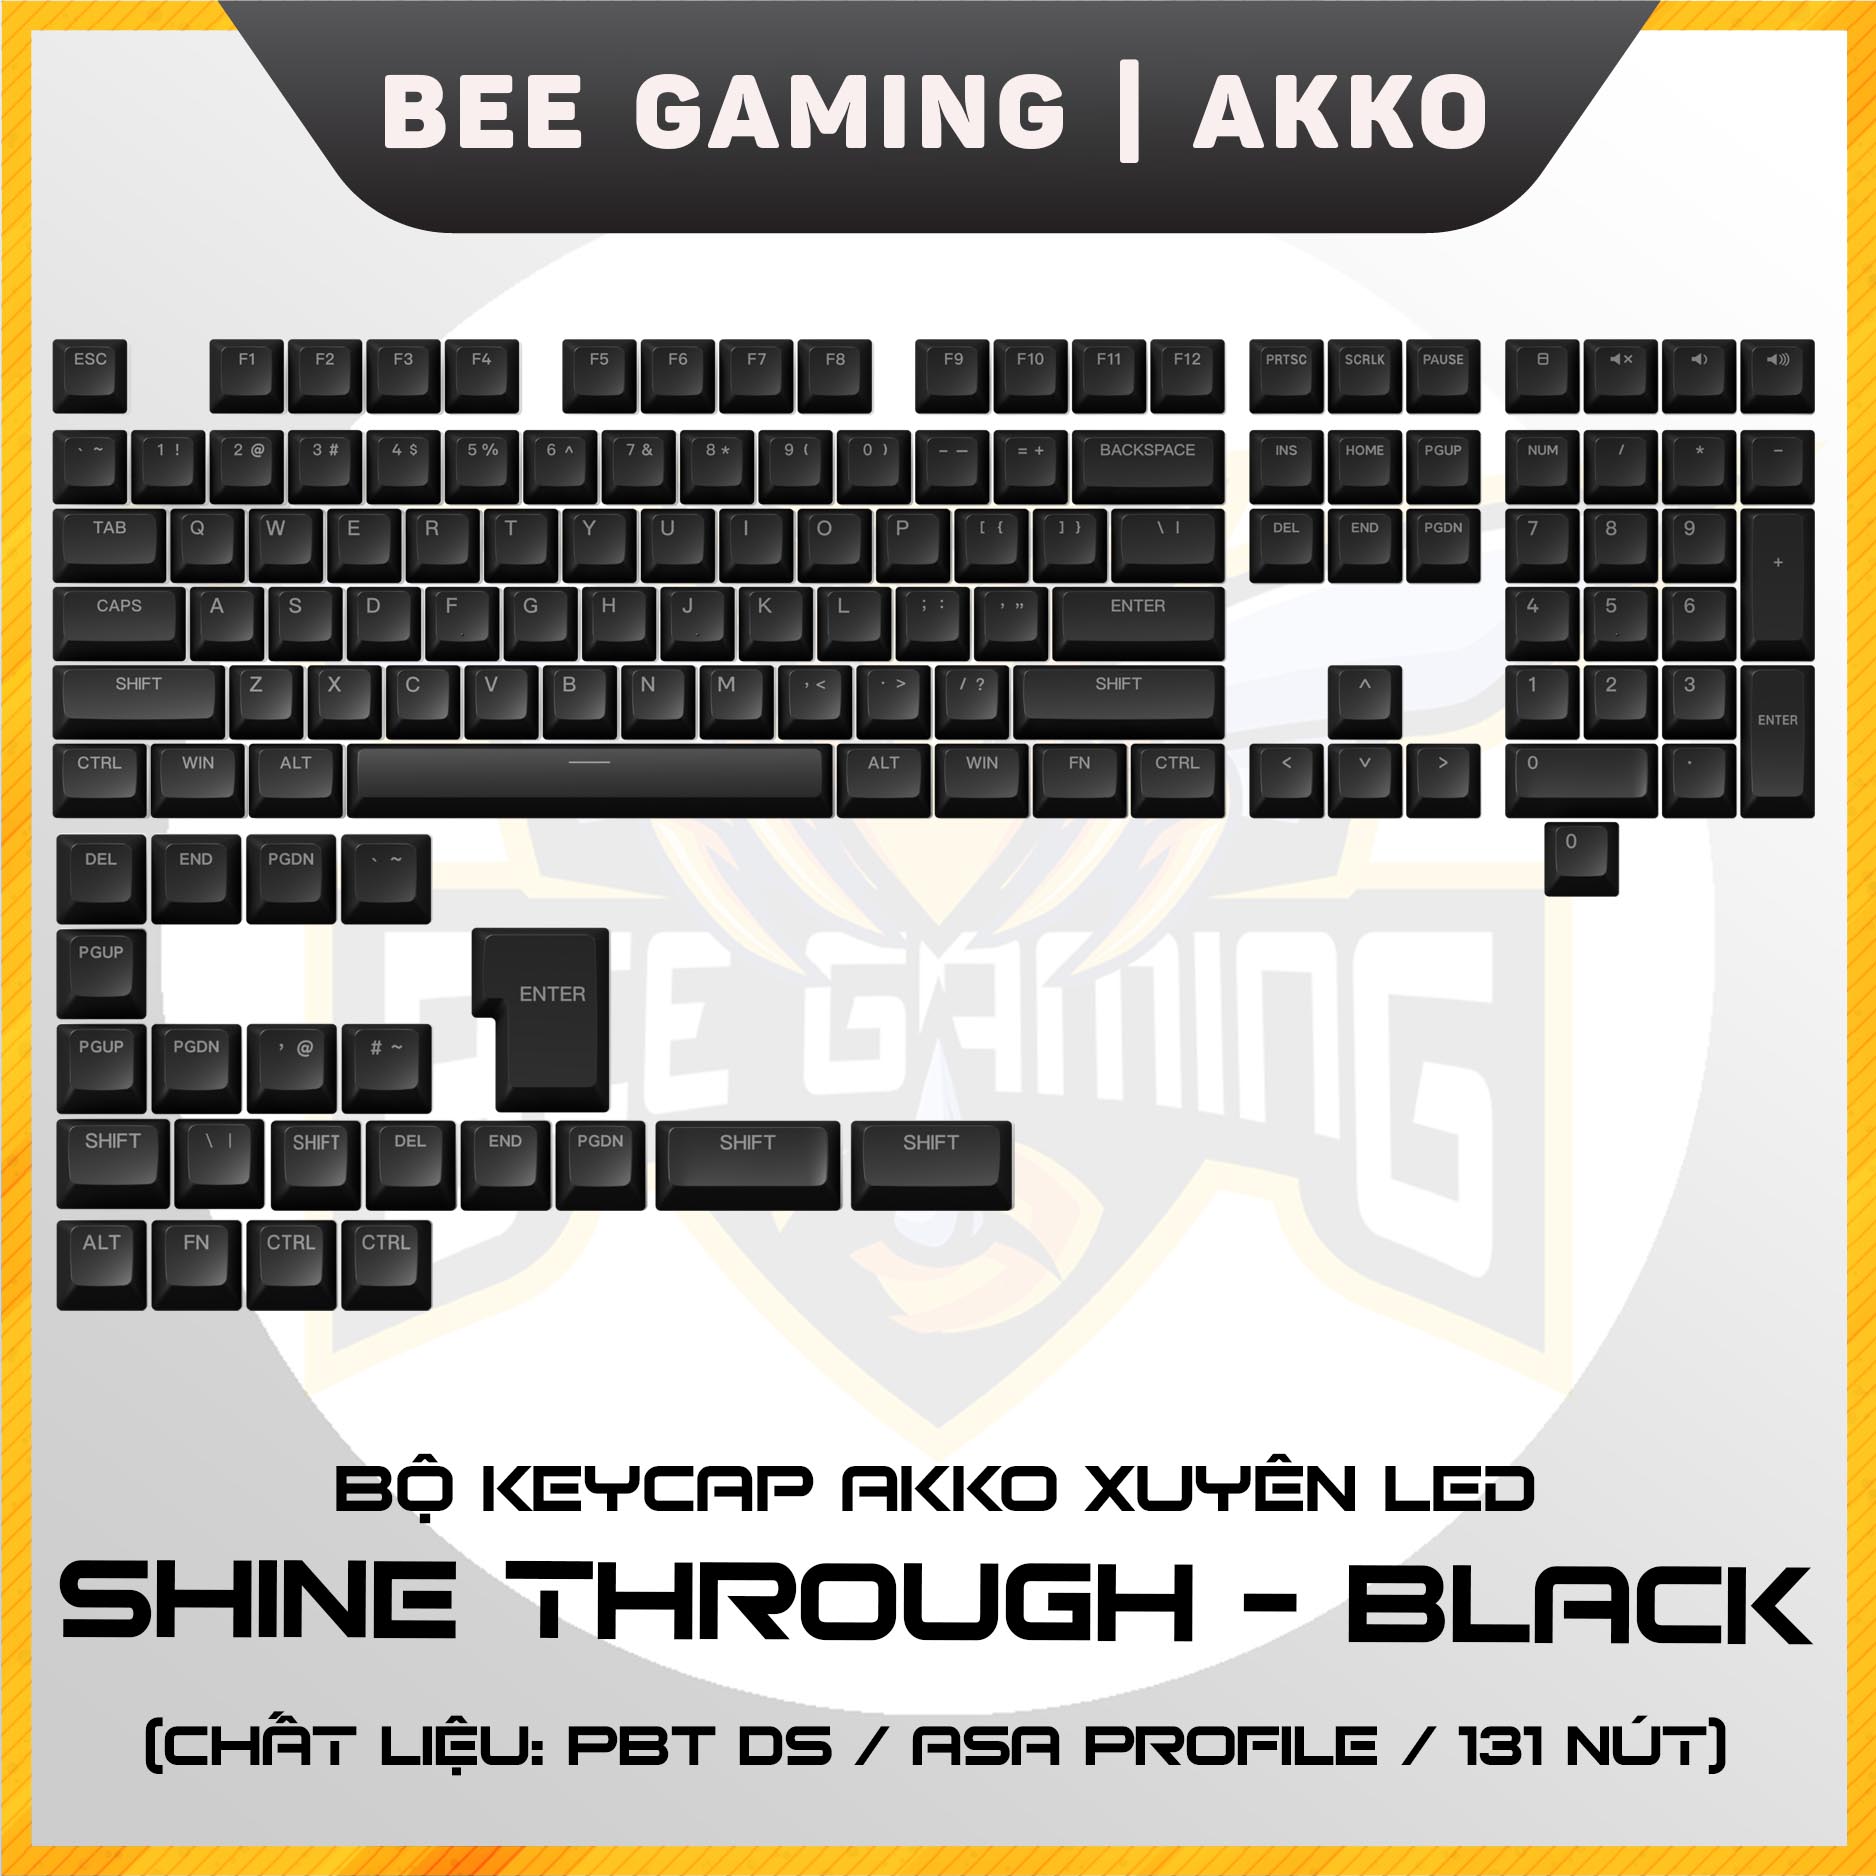 bo-keycap-akko-ASA-Shine-Through-black-xuyen-led-beegaming-1